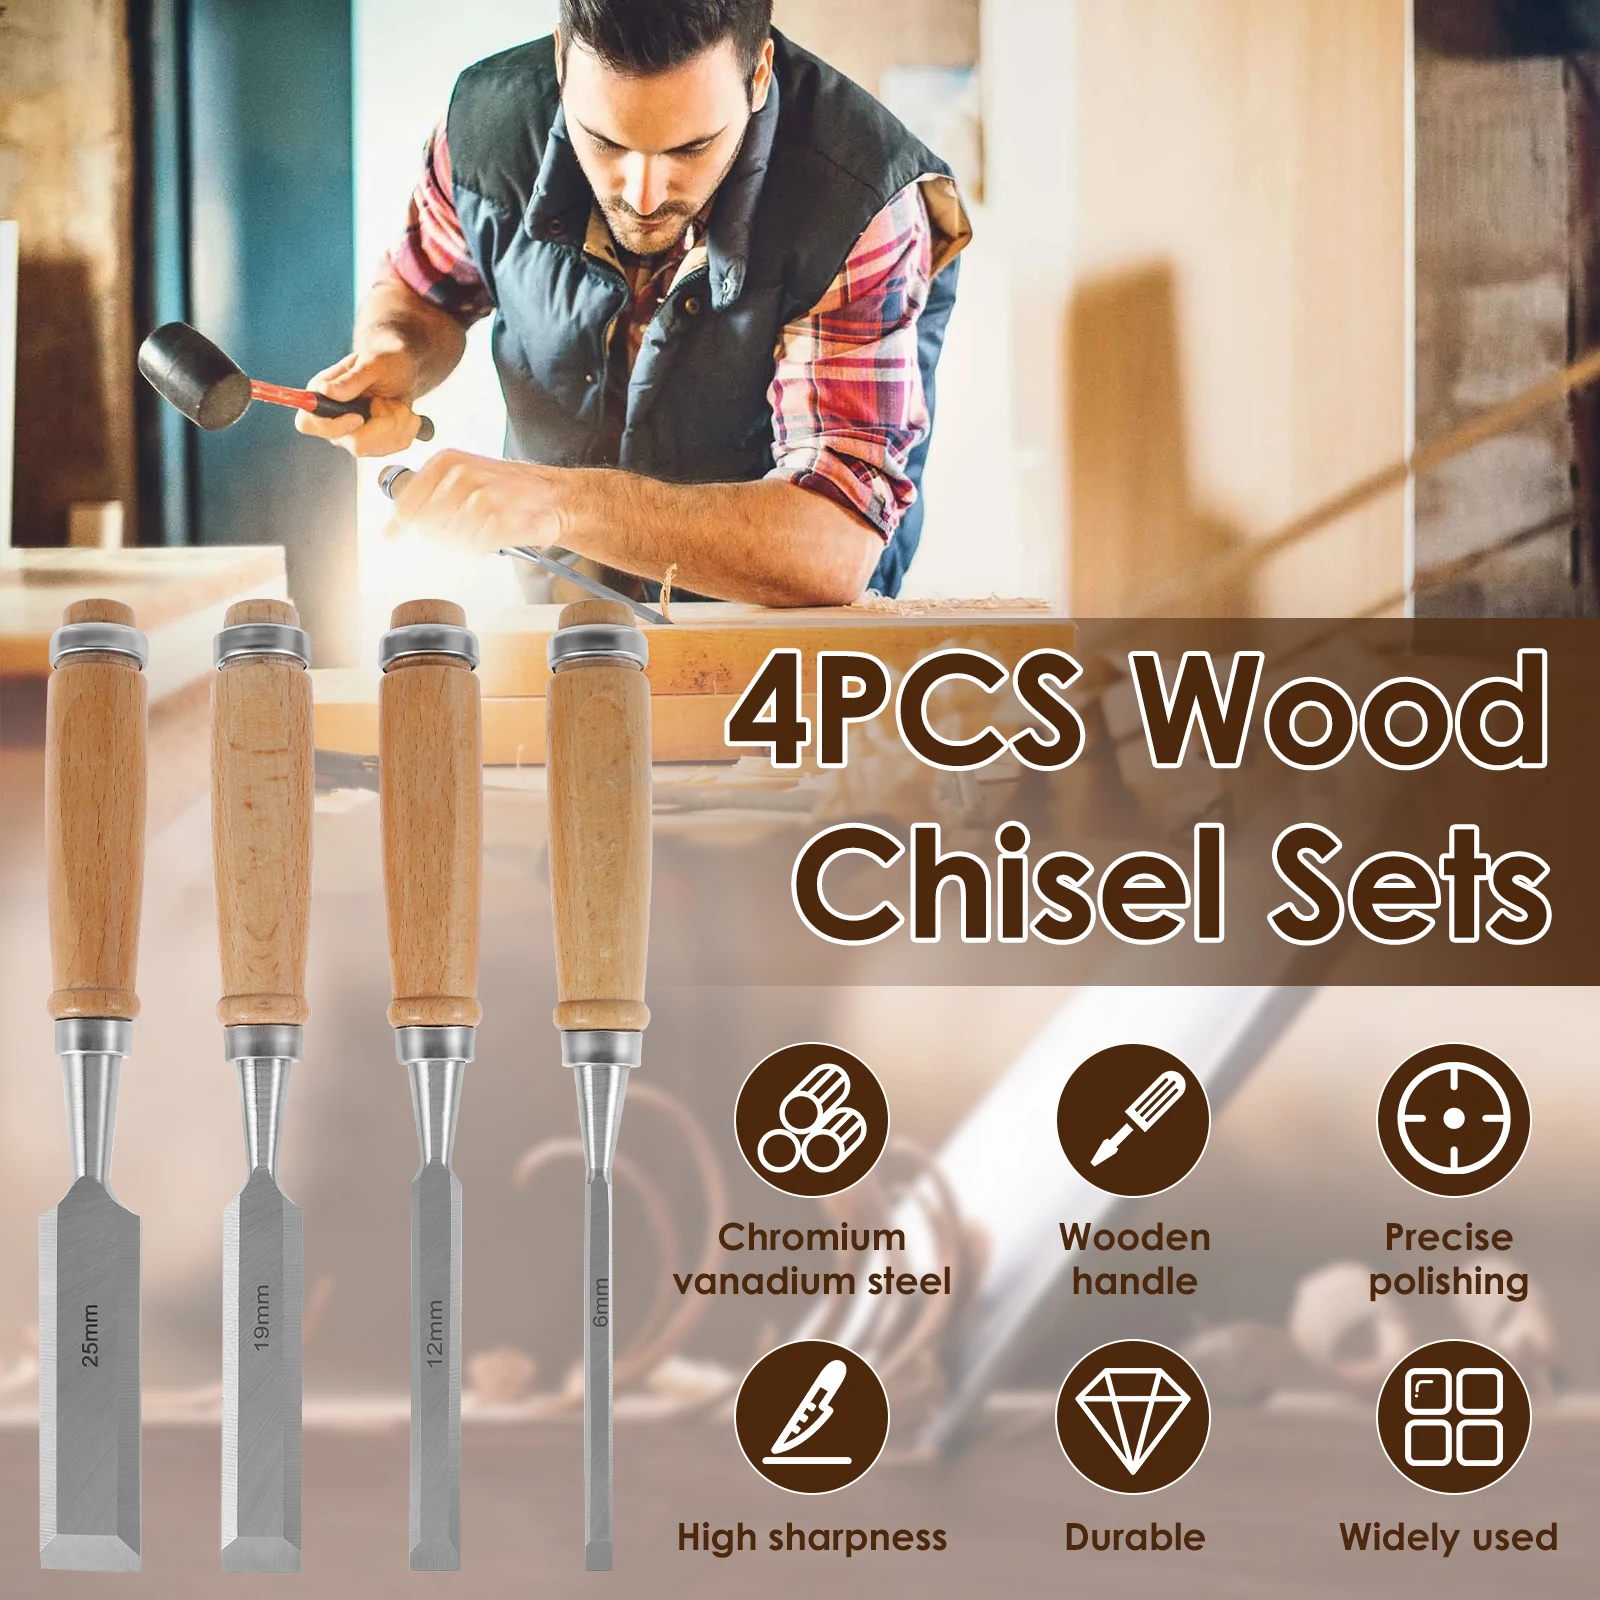 4 Sharp chrome vanadium steel wood chisel set with beech handle ergonomic  wood carving tool for woodworking enthusiast craftsmen - AliExpress